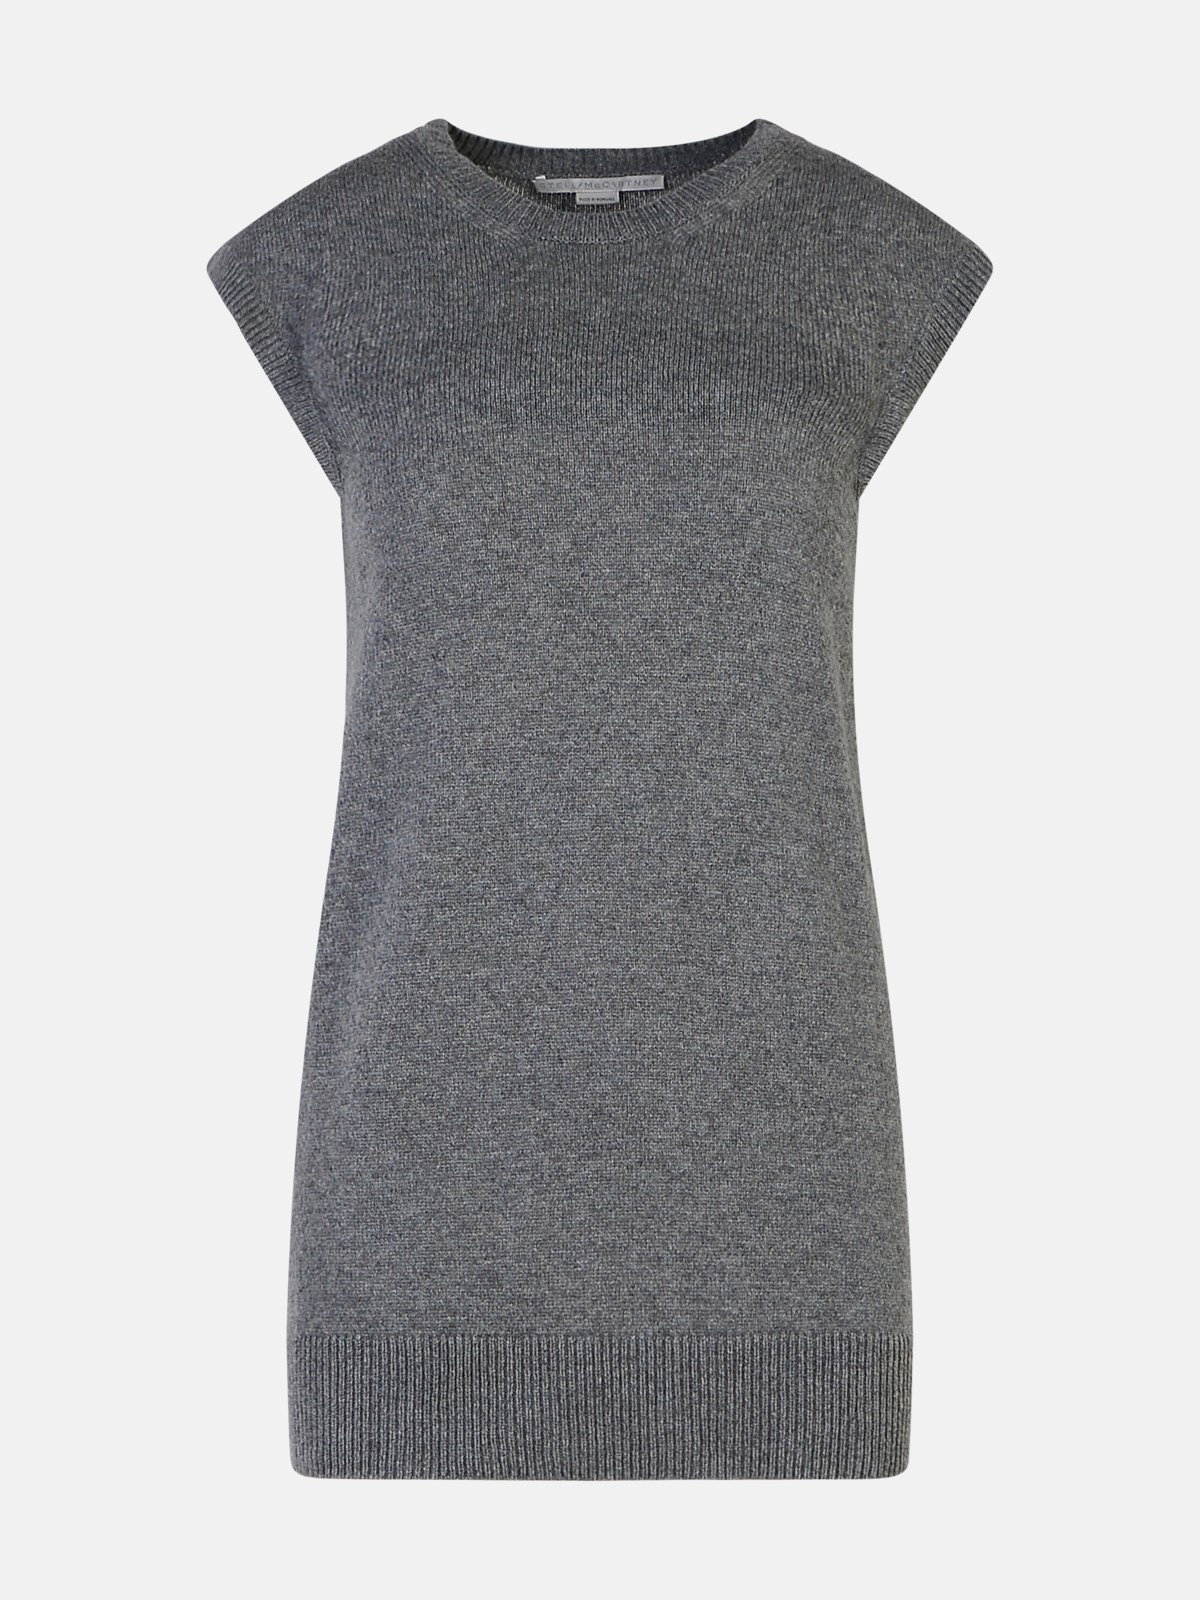 Shop Stella Mccartney '' Sleeveless Grey Cashmere Sweater